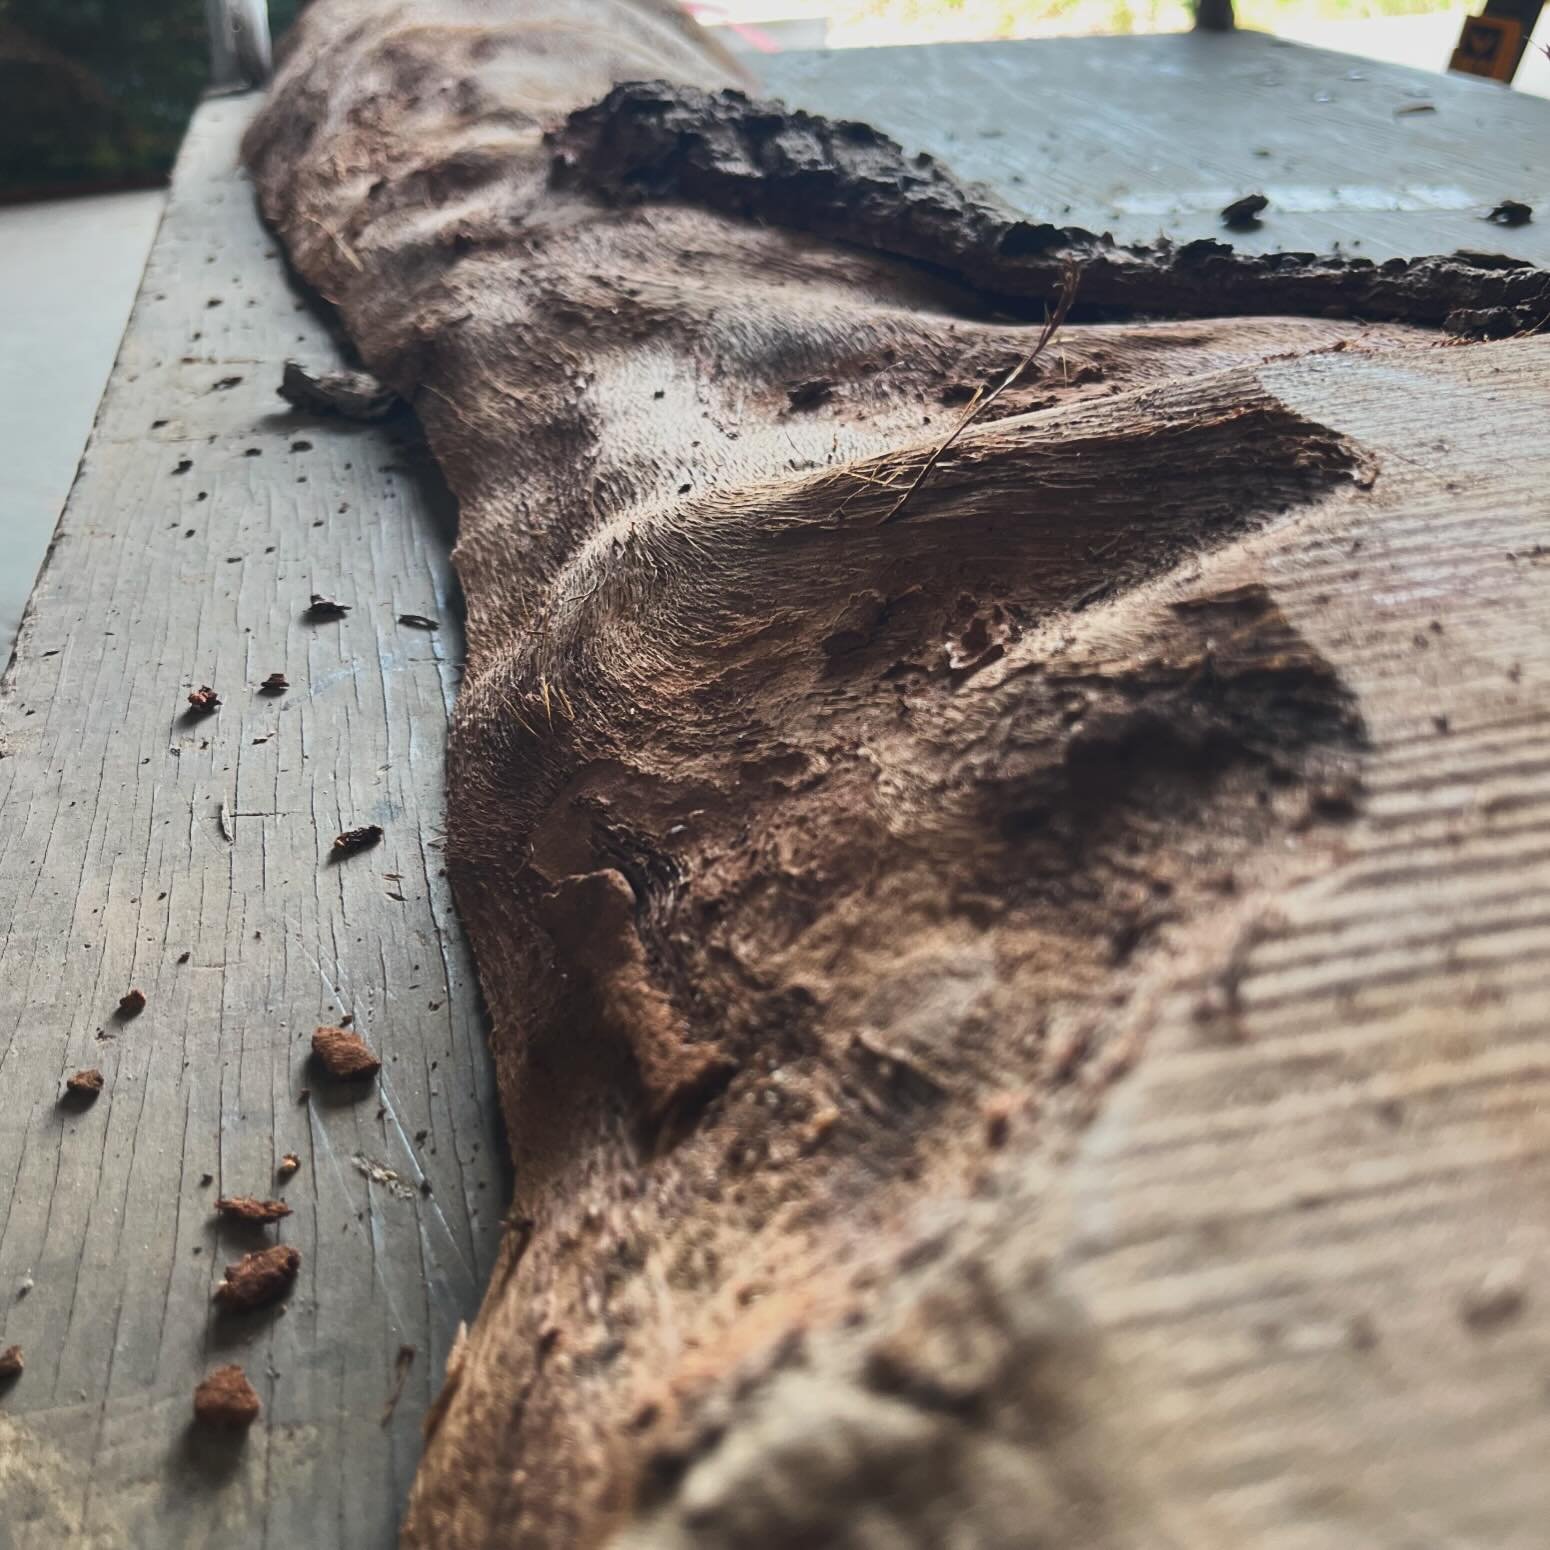 Check out the rolling hills of Savannah 👀

#lumber #salvage #wood #goodwood #salvagedlumber #salvagedwood #yard #rps #repurpose #wonderfulwood